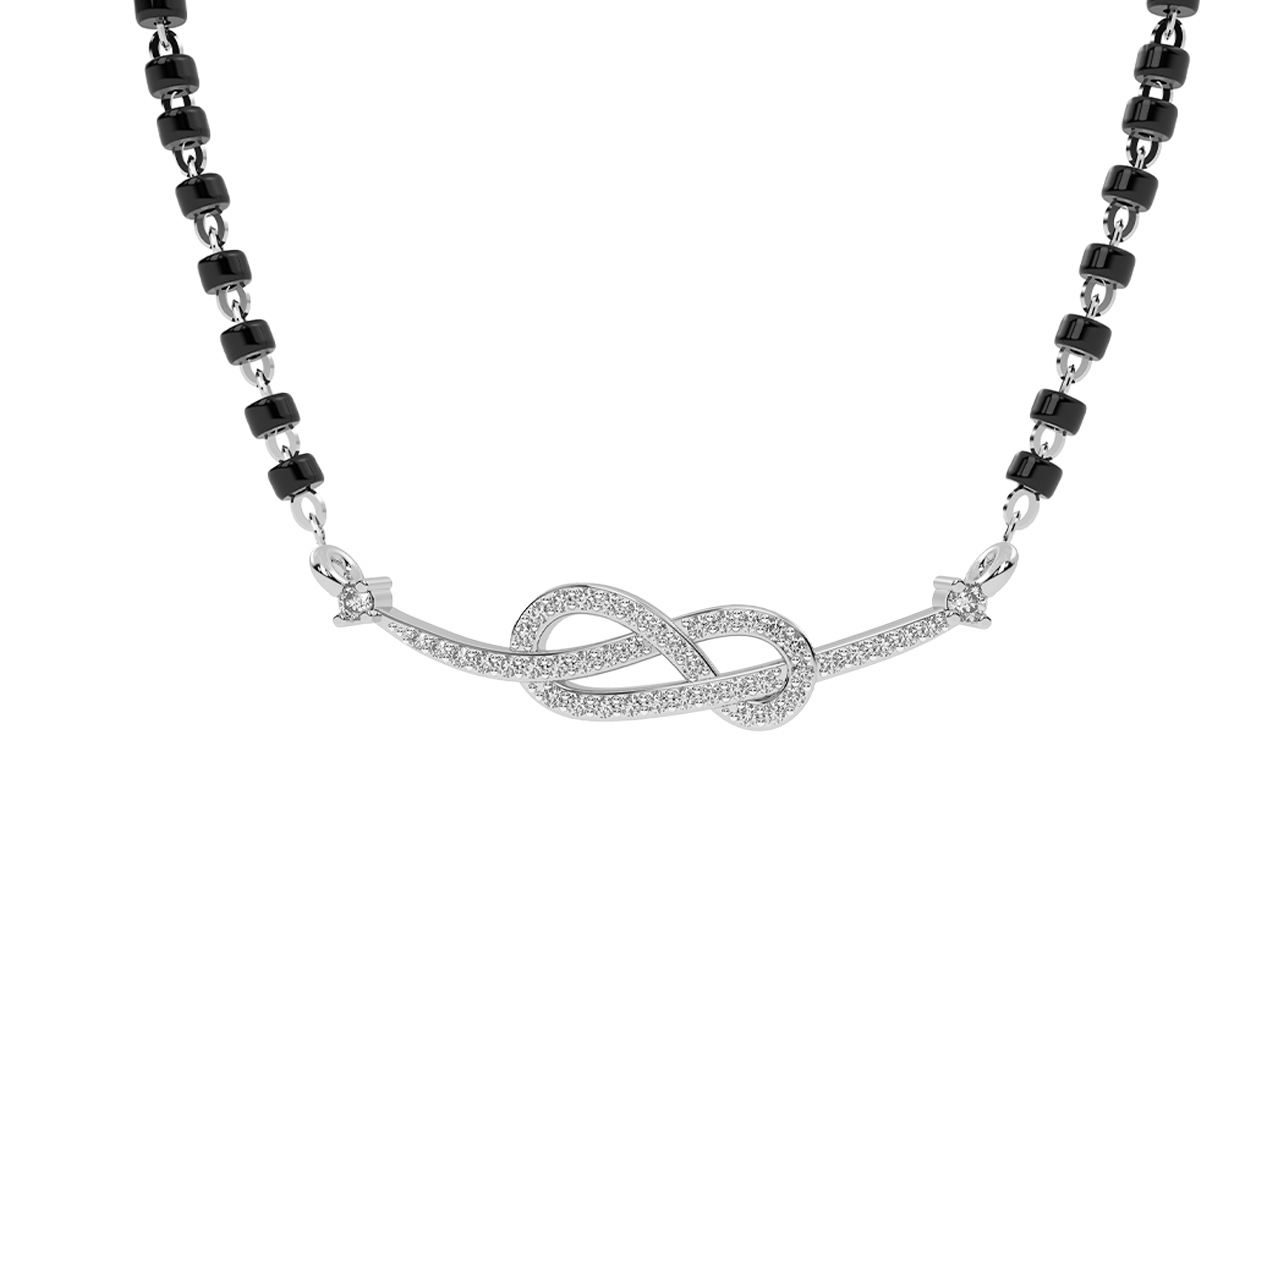 Designer Mangalsutra With Chain